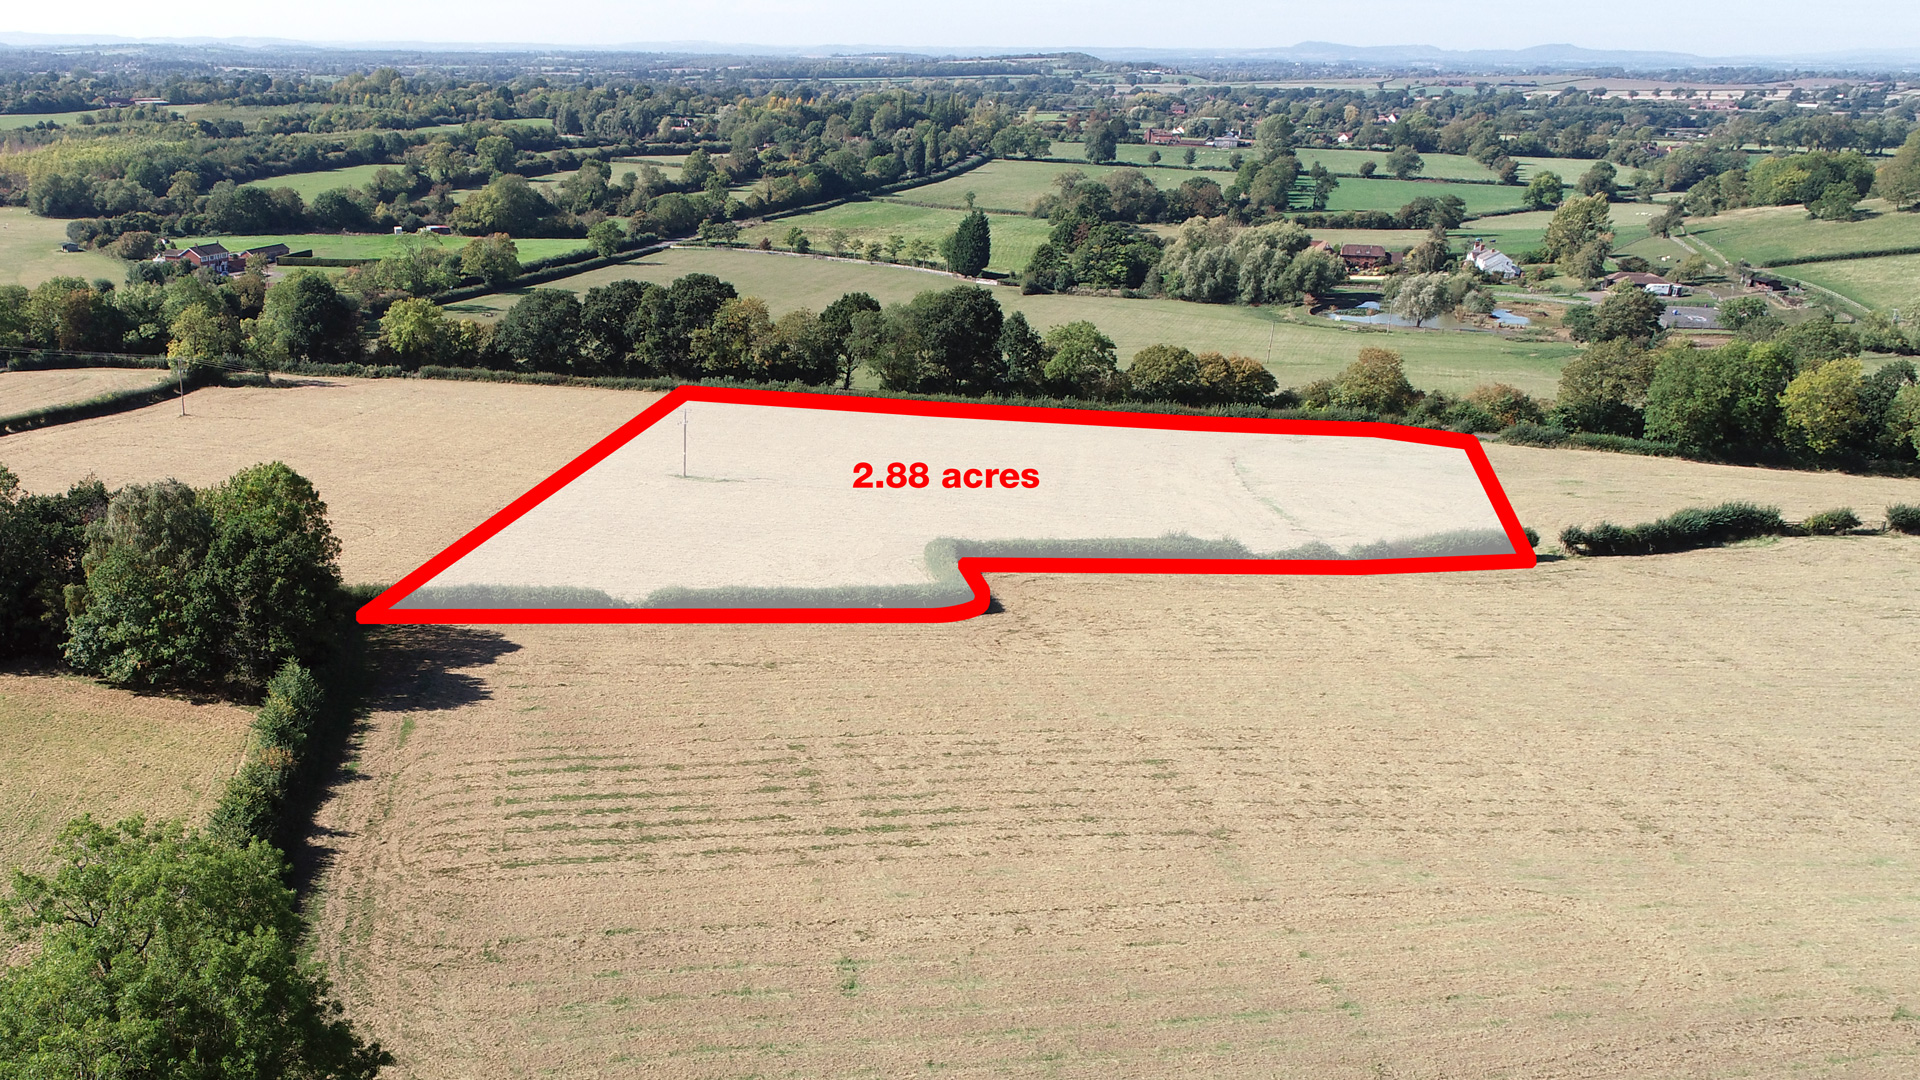 Land for sale in Feckenham, Redditch aerial view